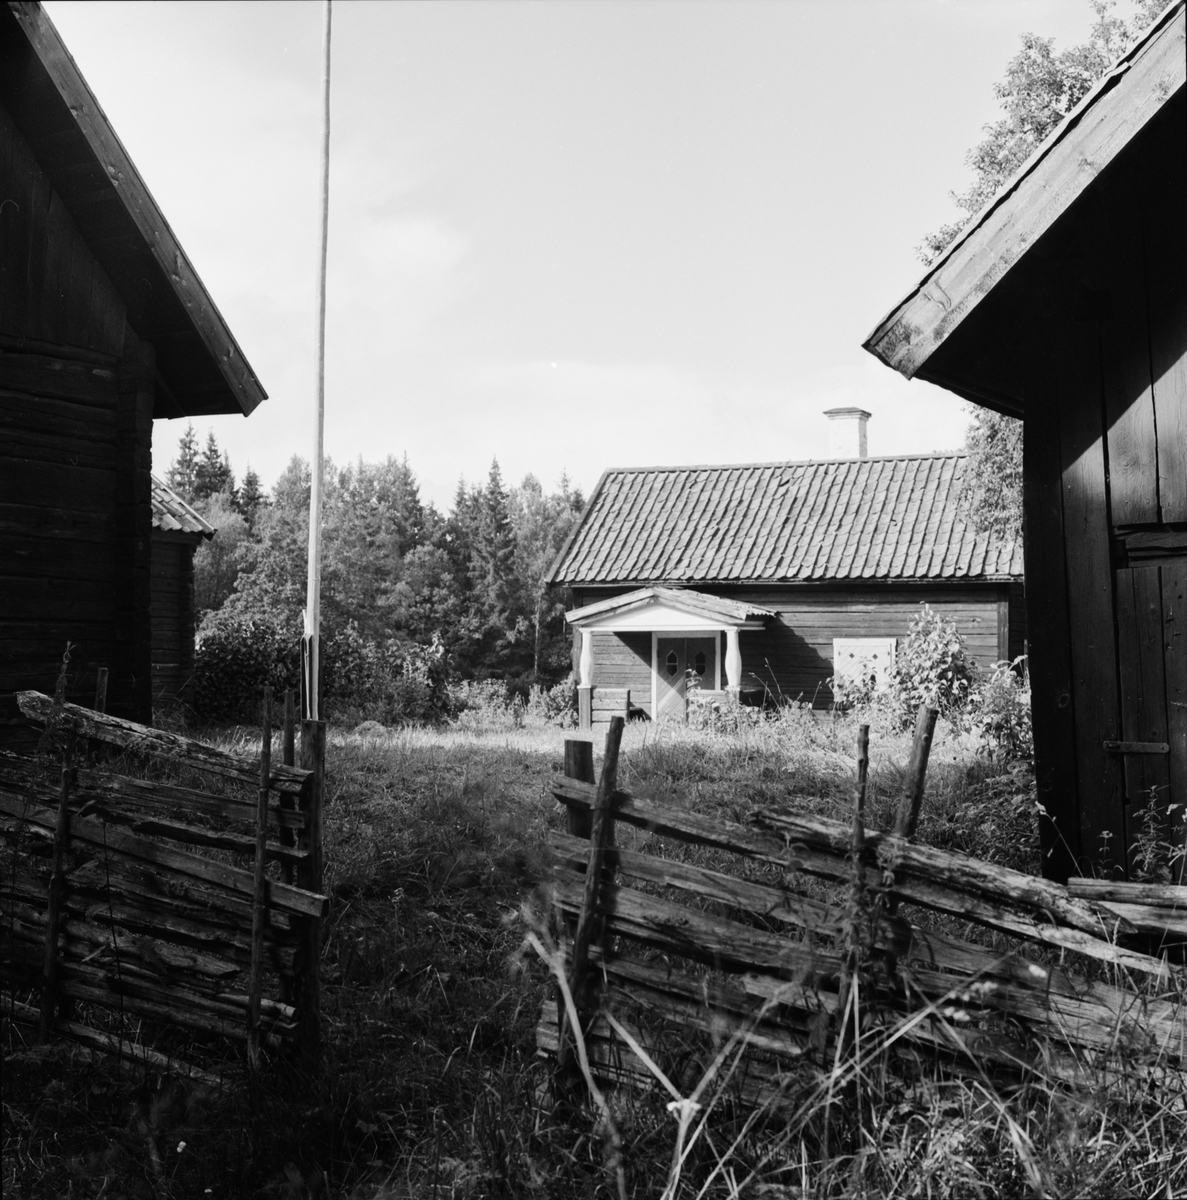 "Norredatorp - tomt i augusti", Uppland 1961